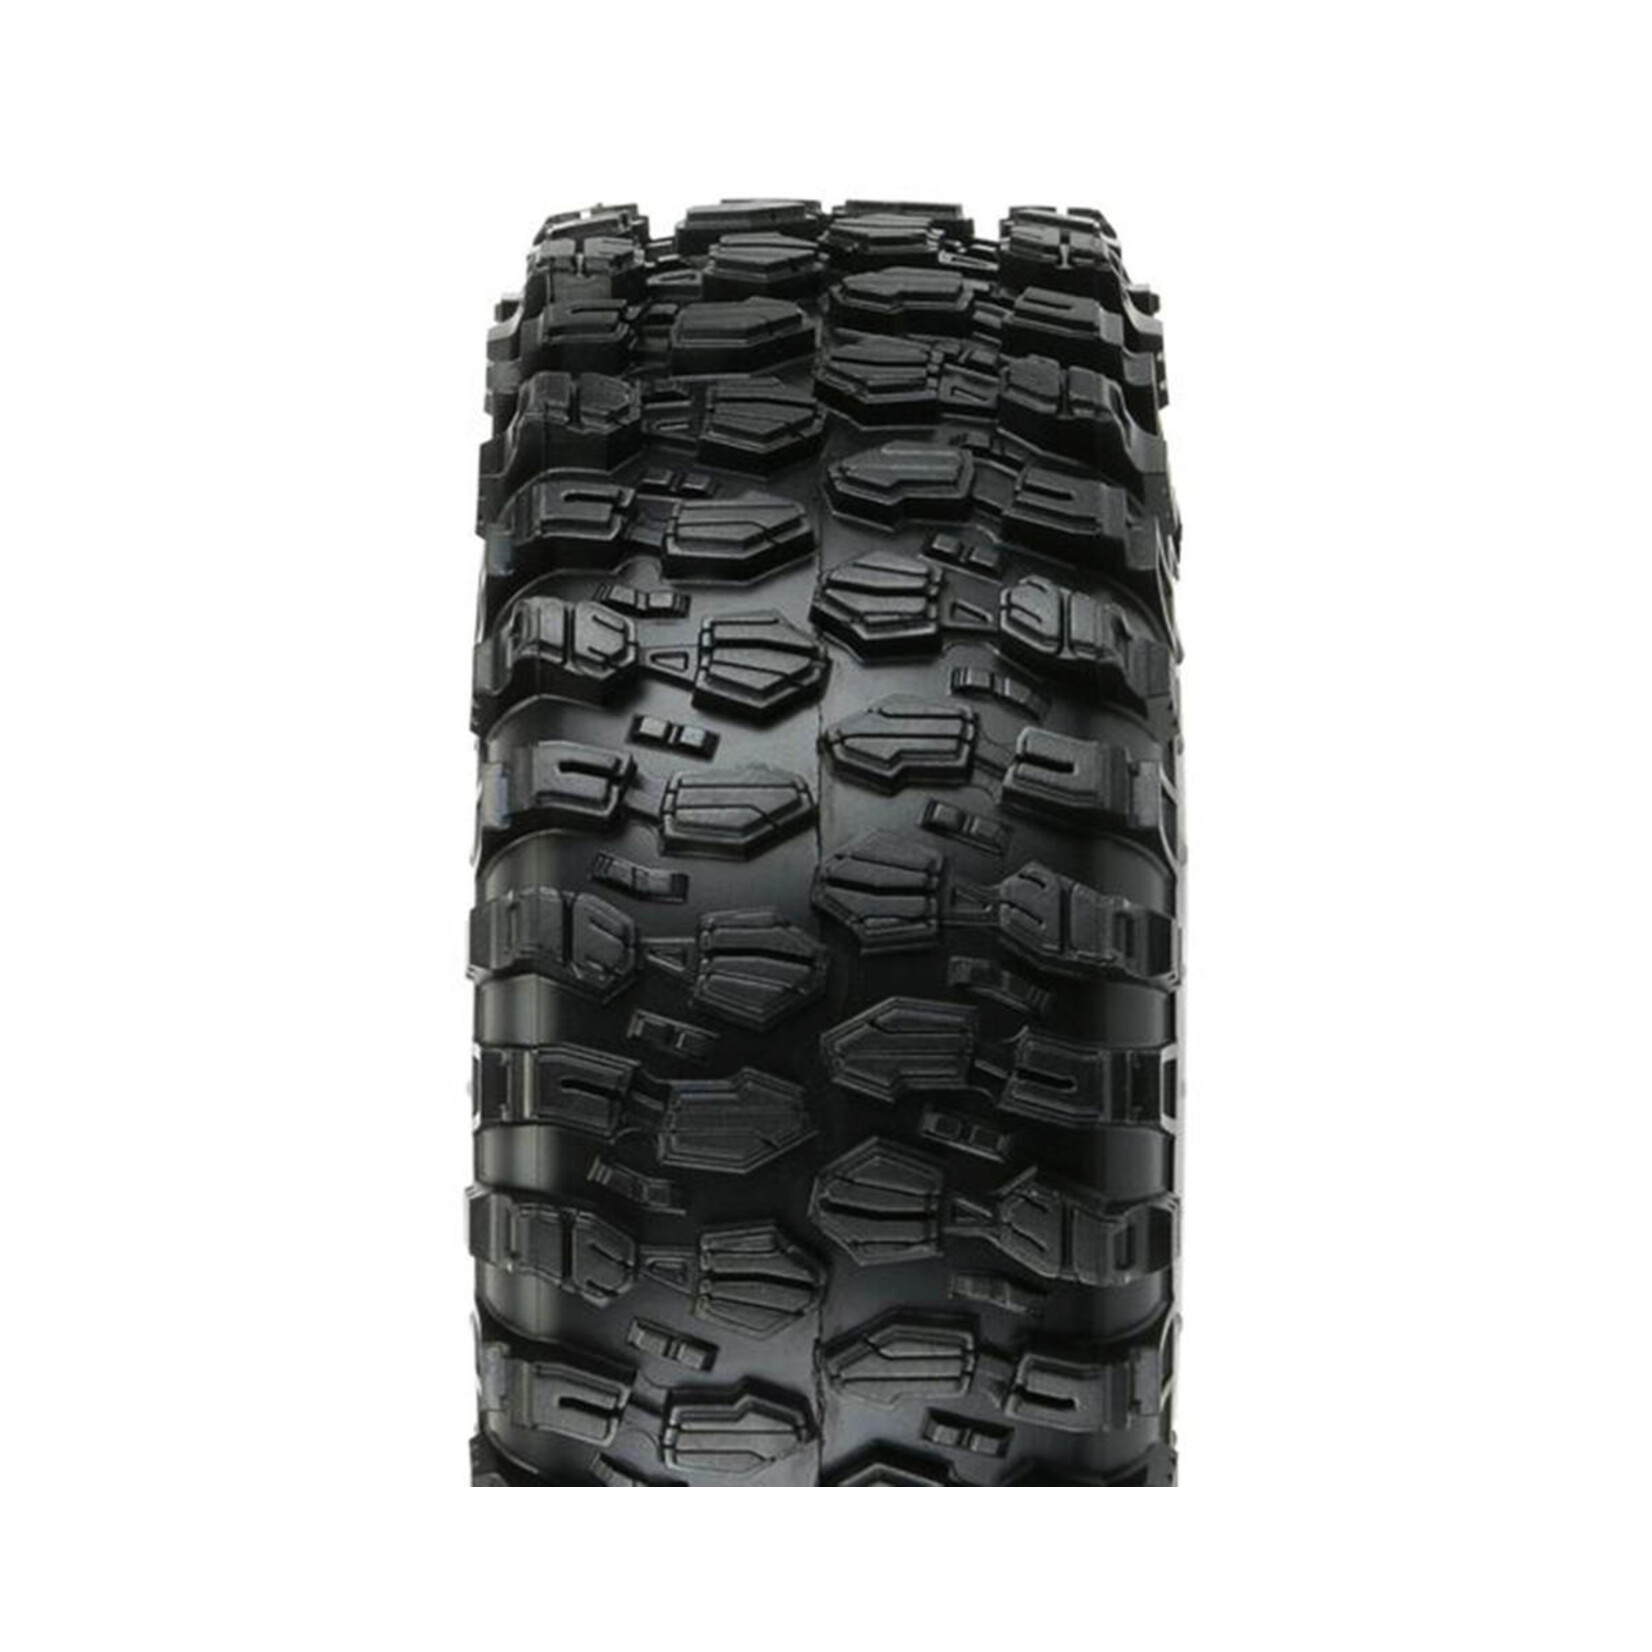 Pro-Line Pro-Line Hyrax 1.9" Rock Crawler Tires (2) (G8) #10128-14